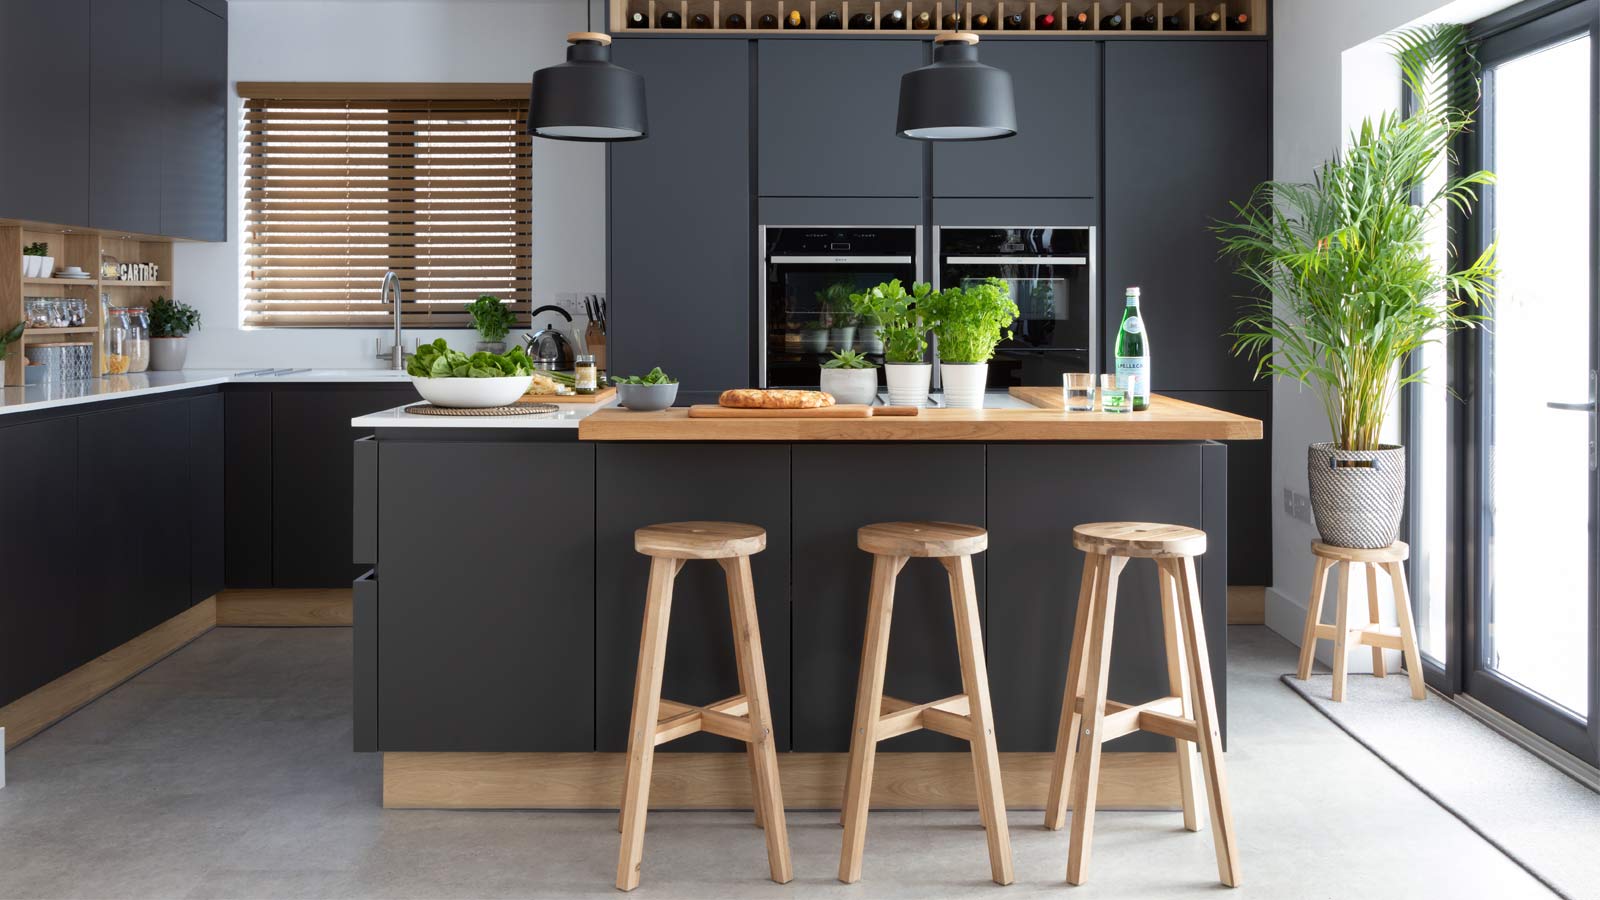 Biophilic interior design demonstrated in a handleless, modern kitchen